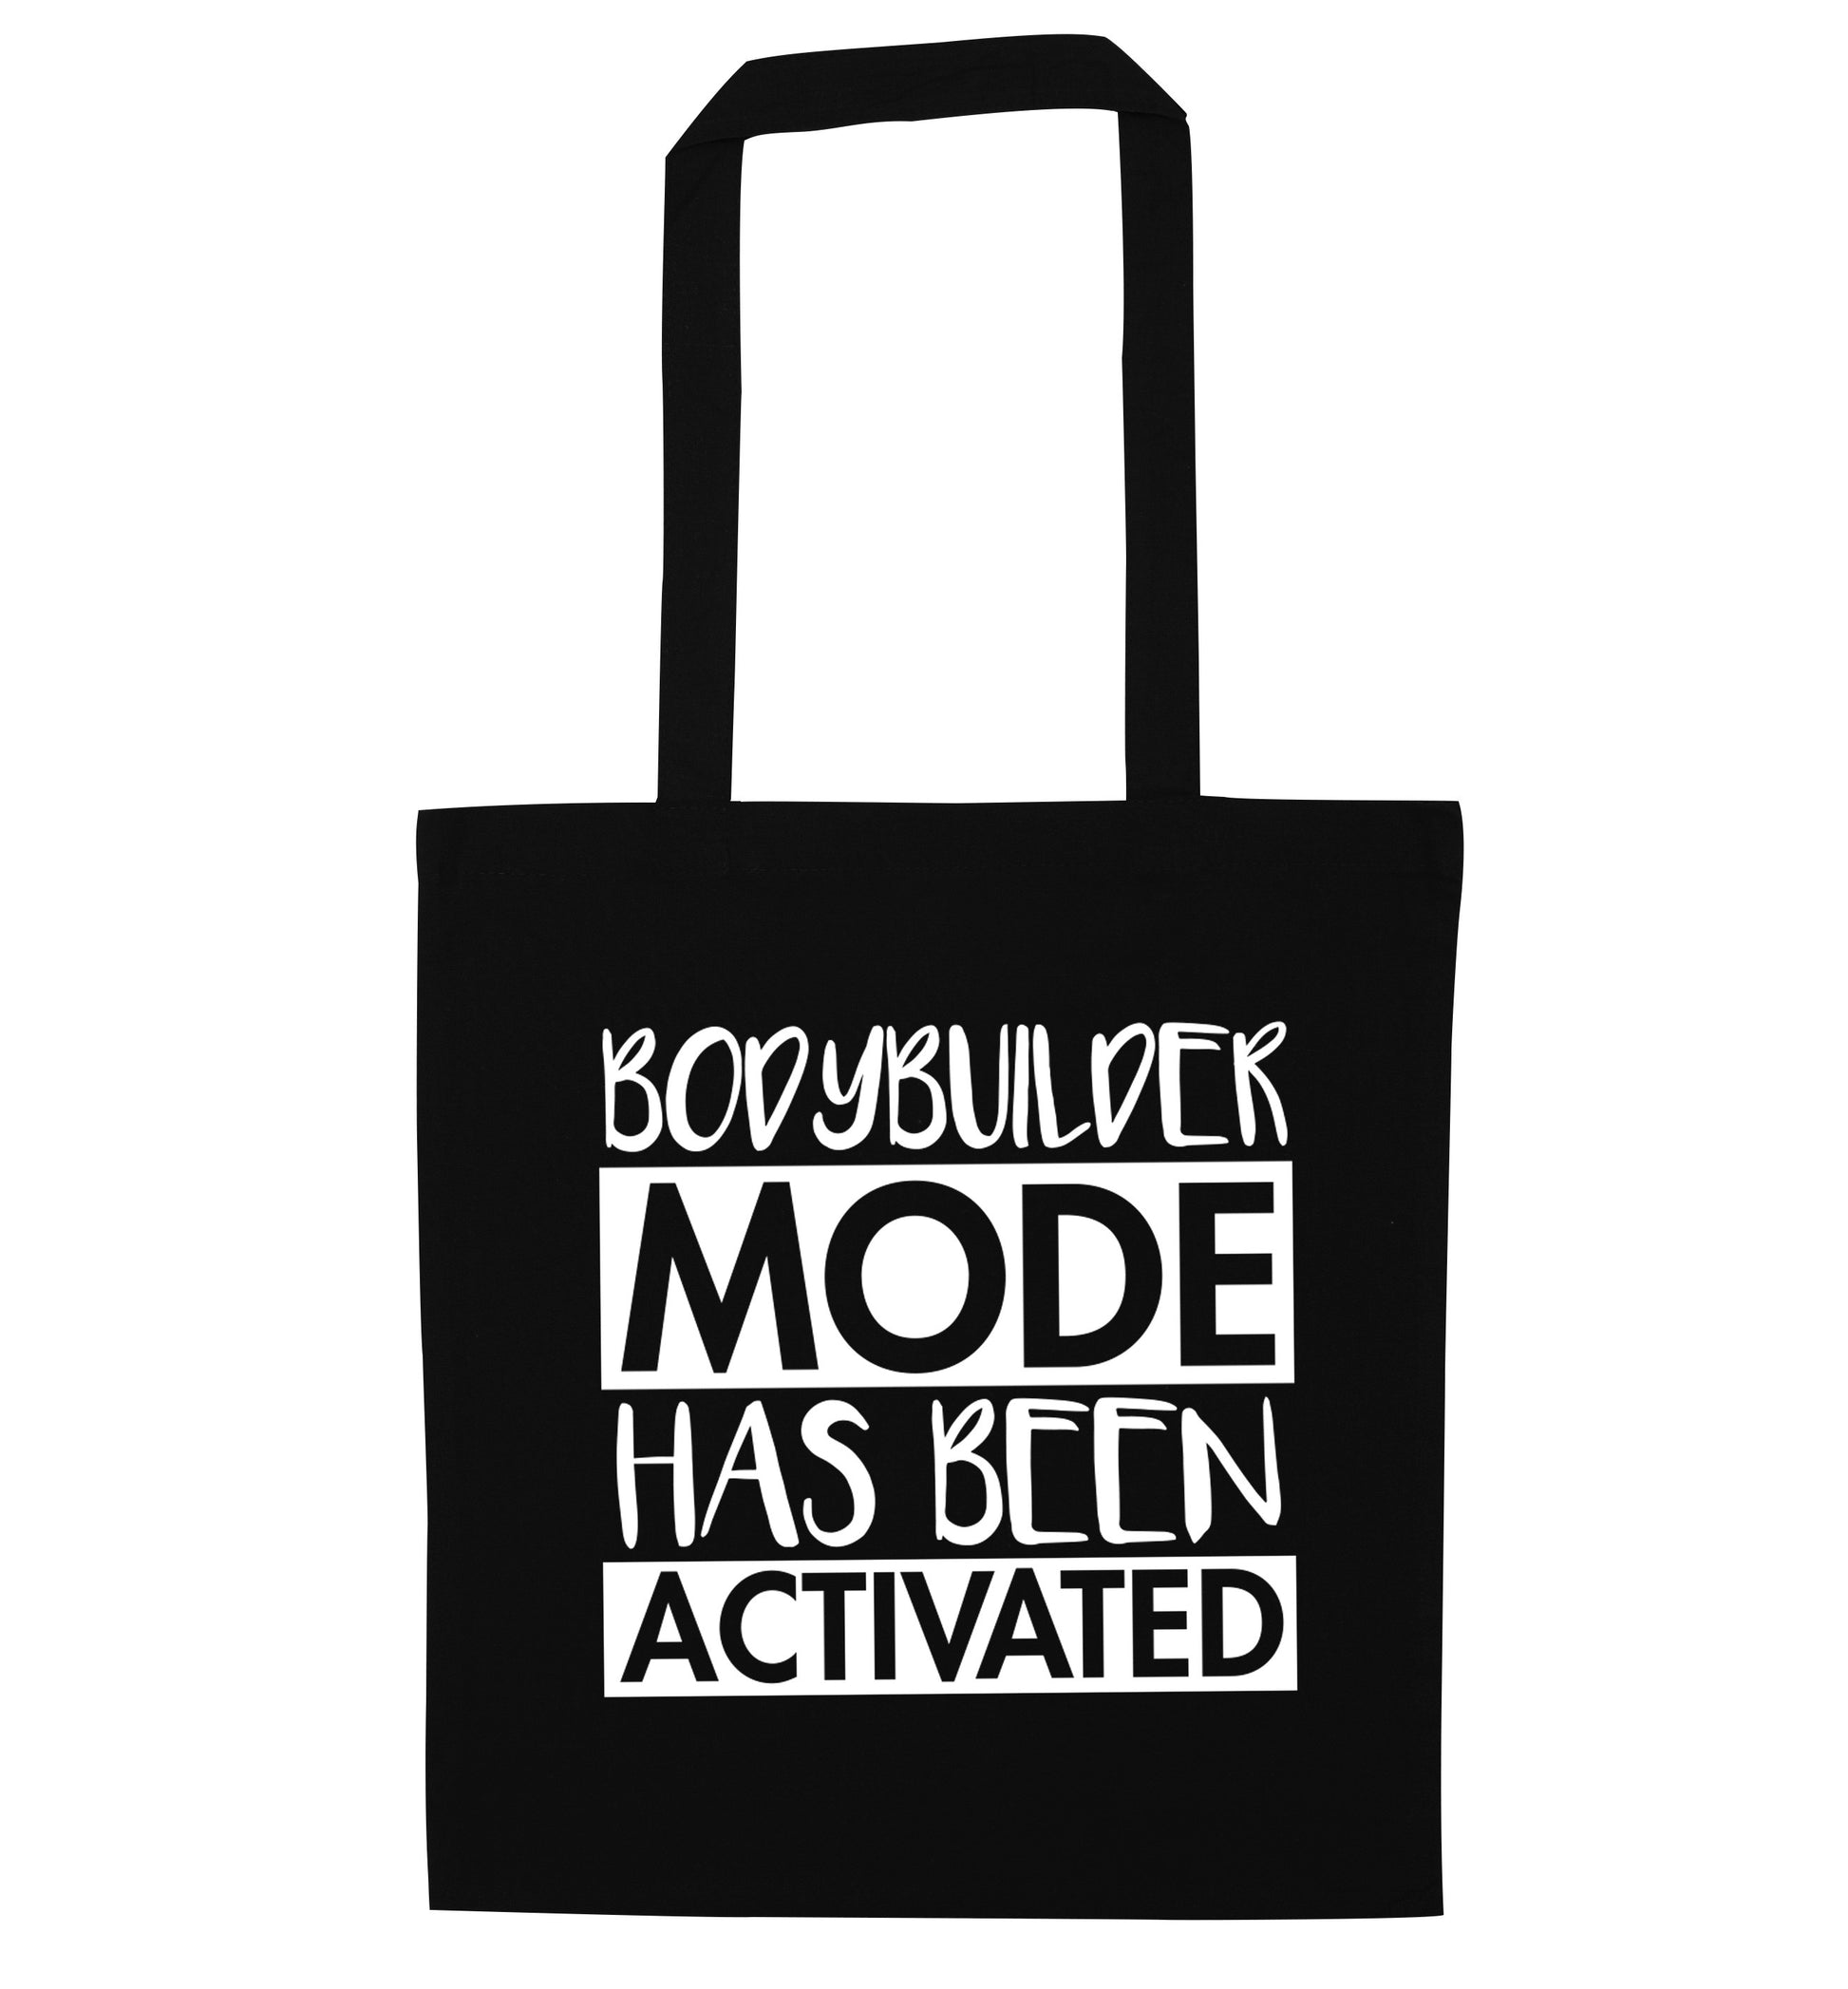 Bodybuilder mode activated black tote bag